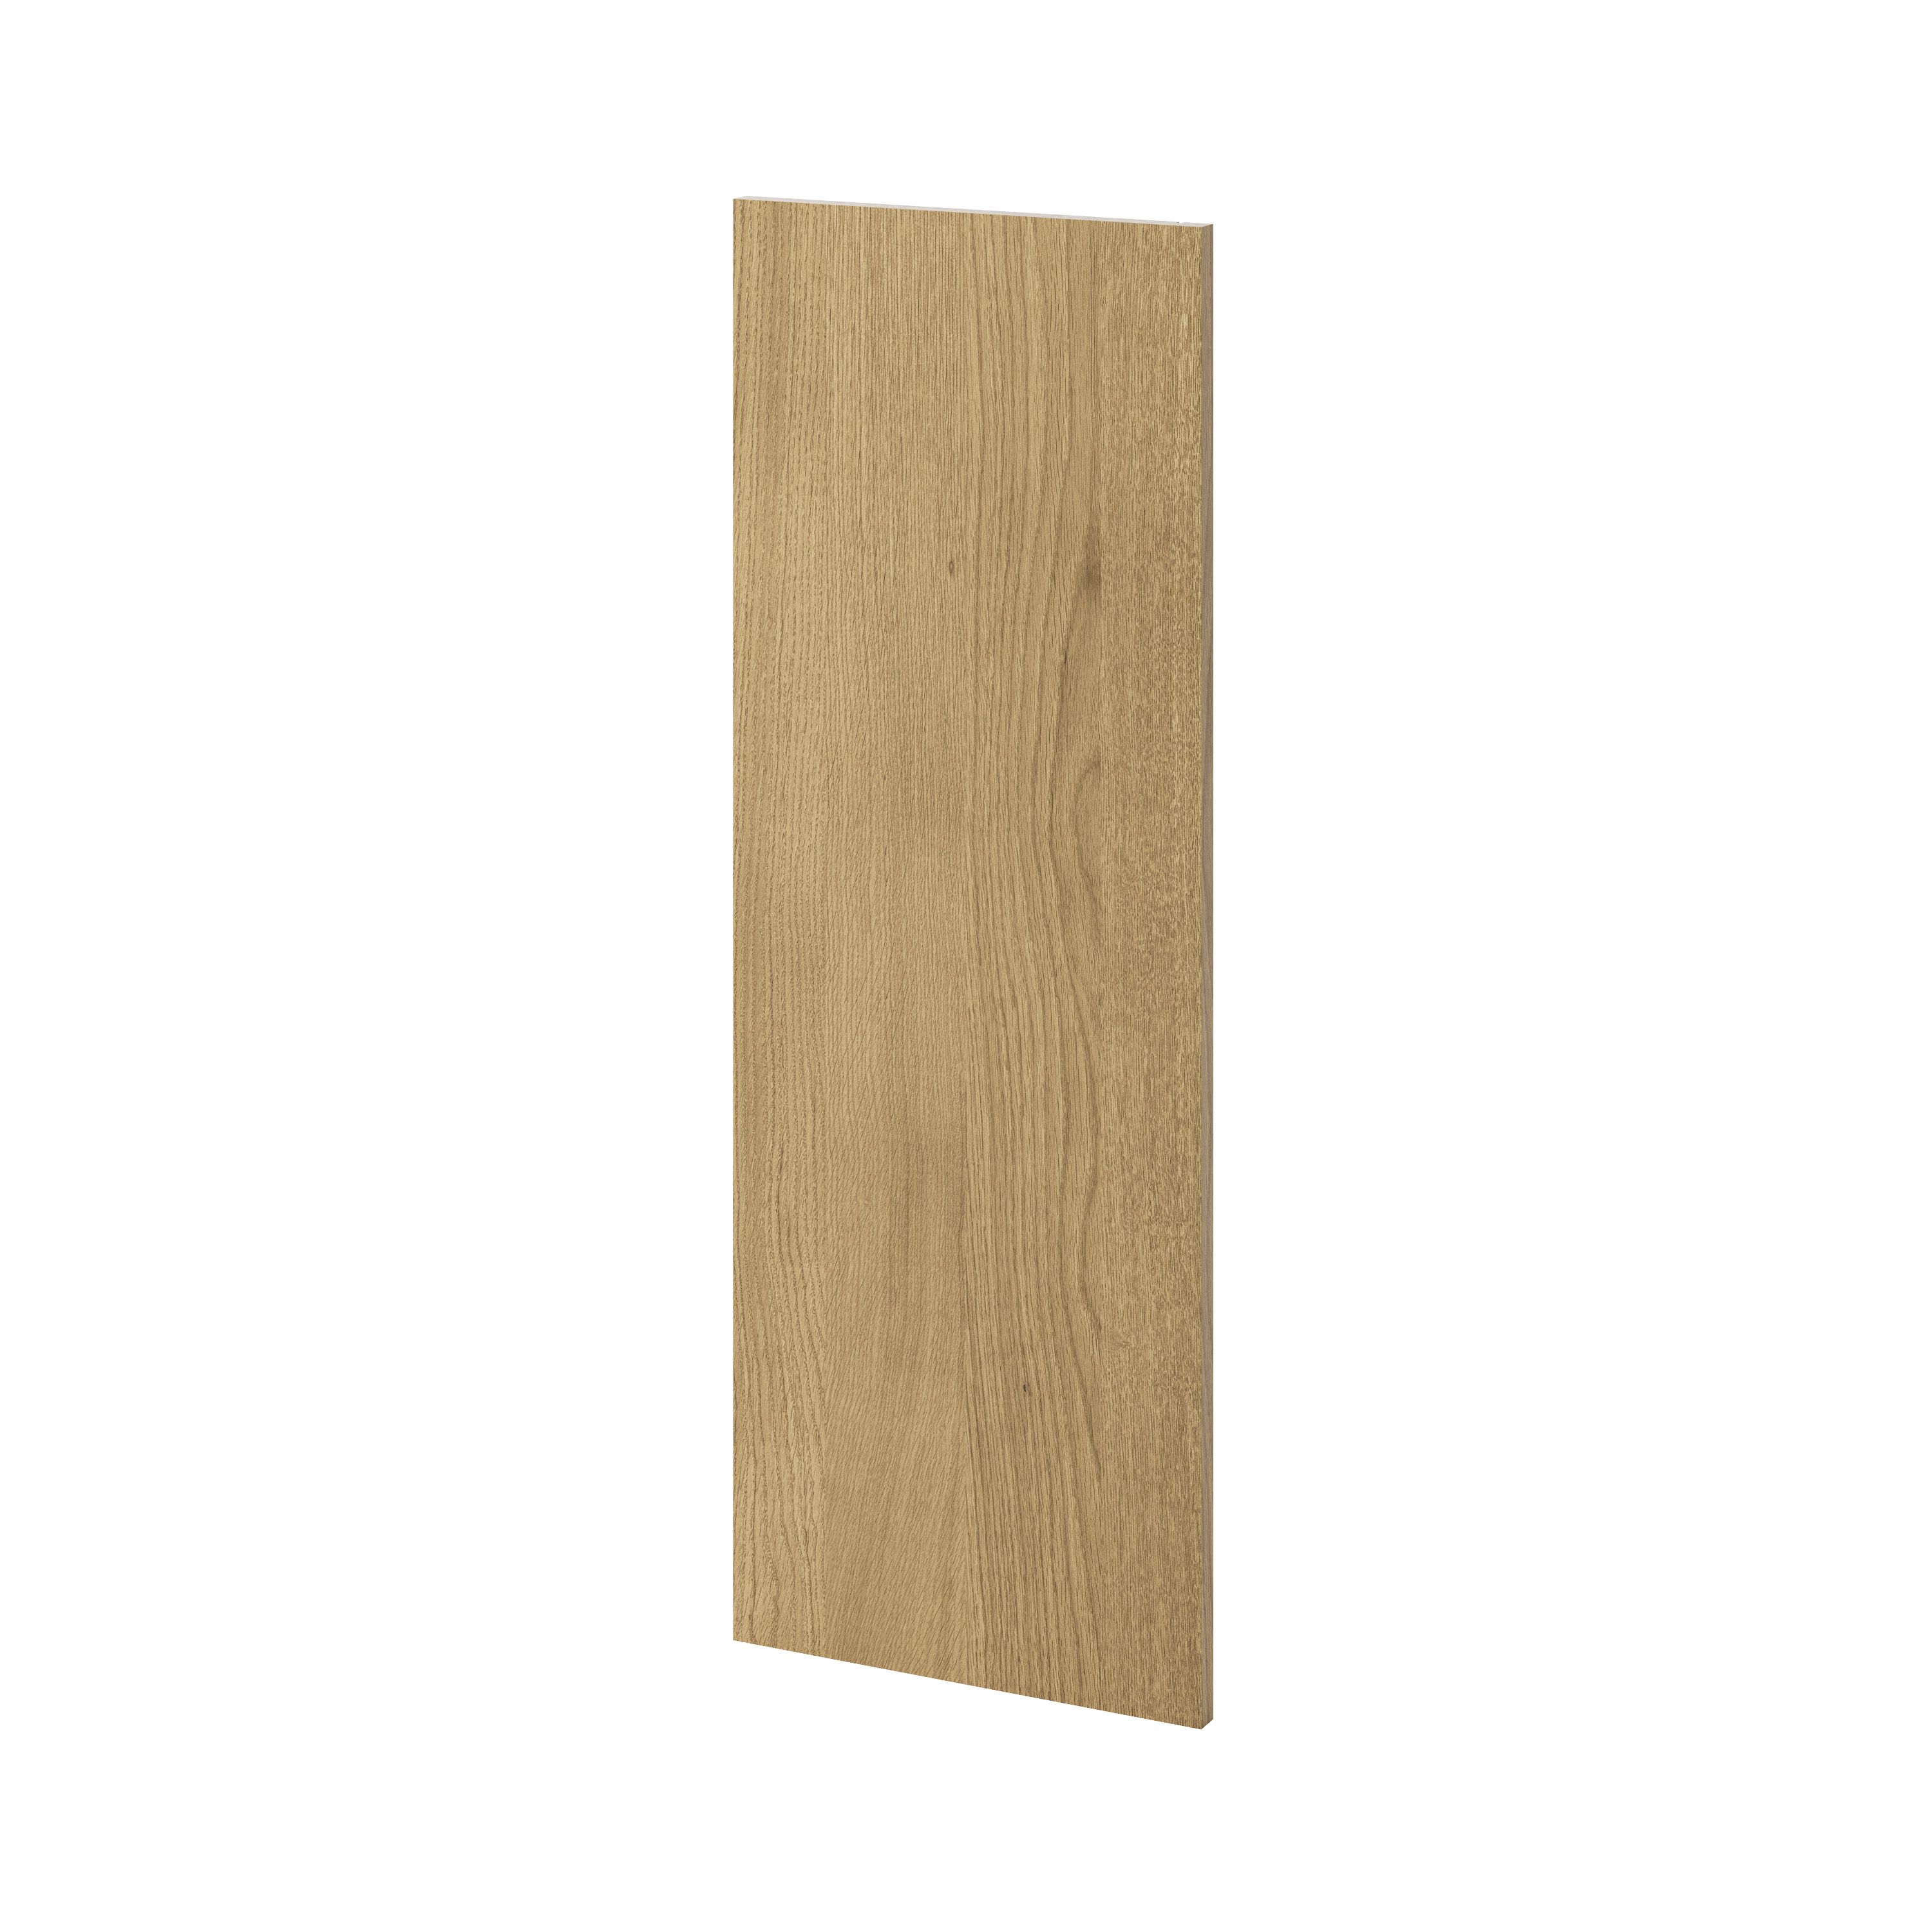 GoodHome Verbena Natural oak shaker Tall Wall End panel (H)900mm (W)320mm